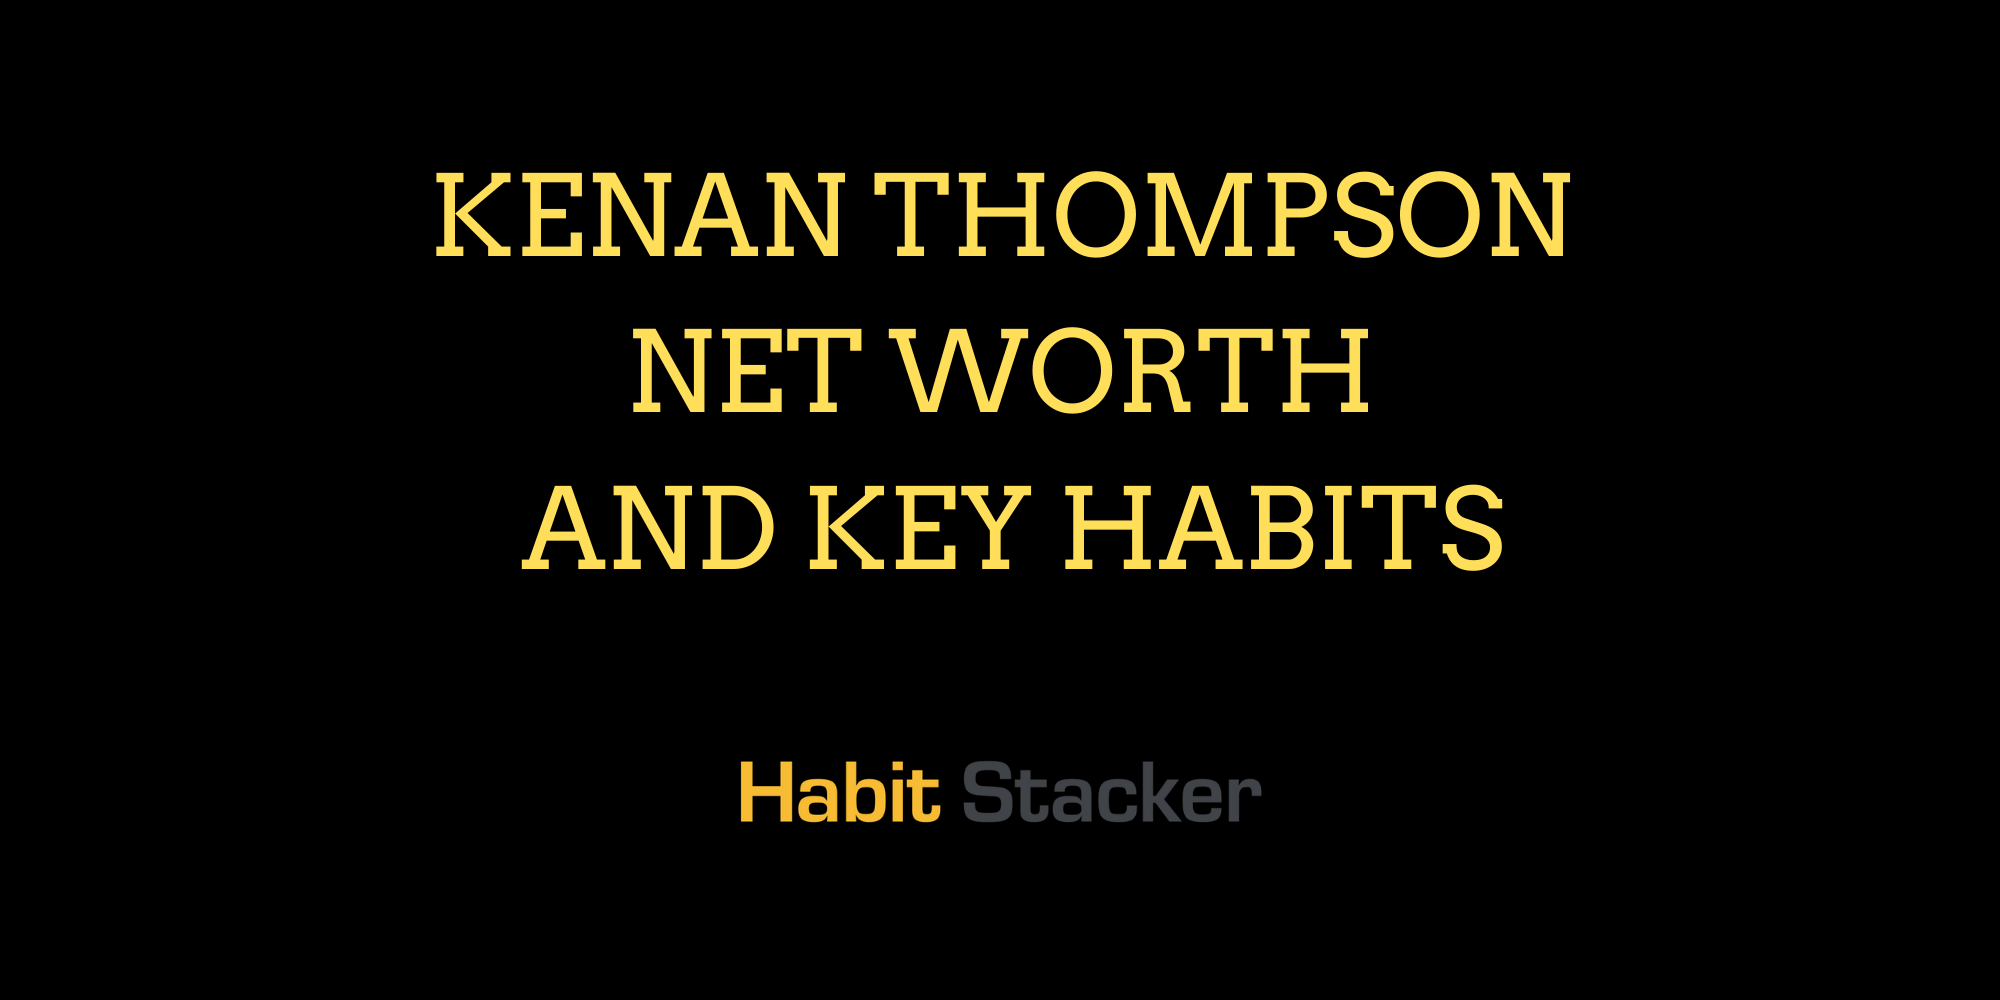 Kenan Thompson Net Worth And Key Habits